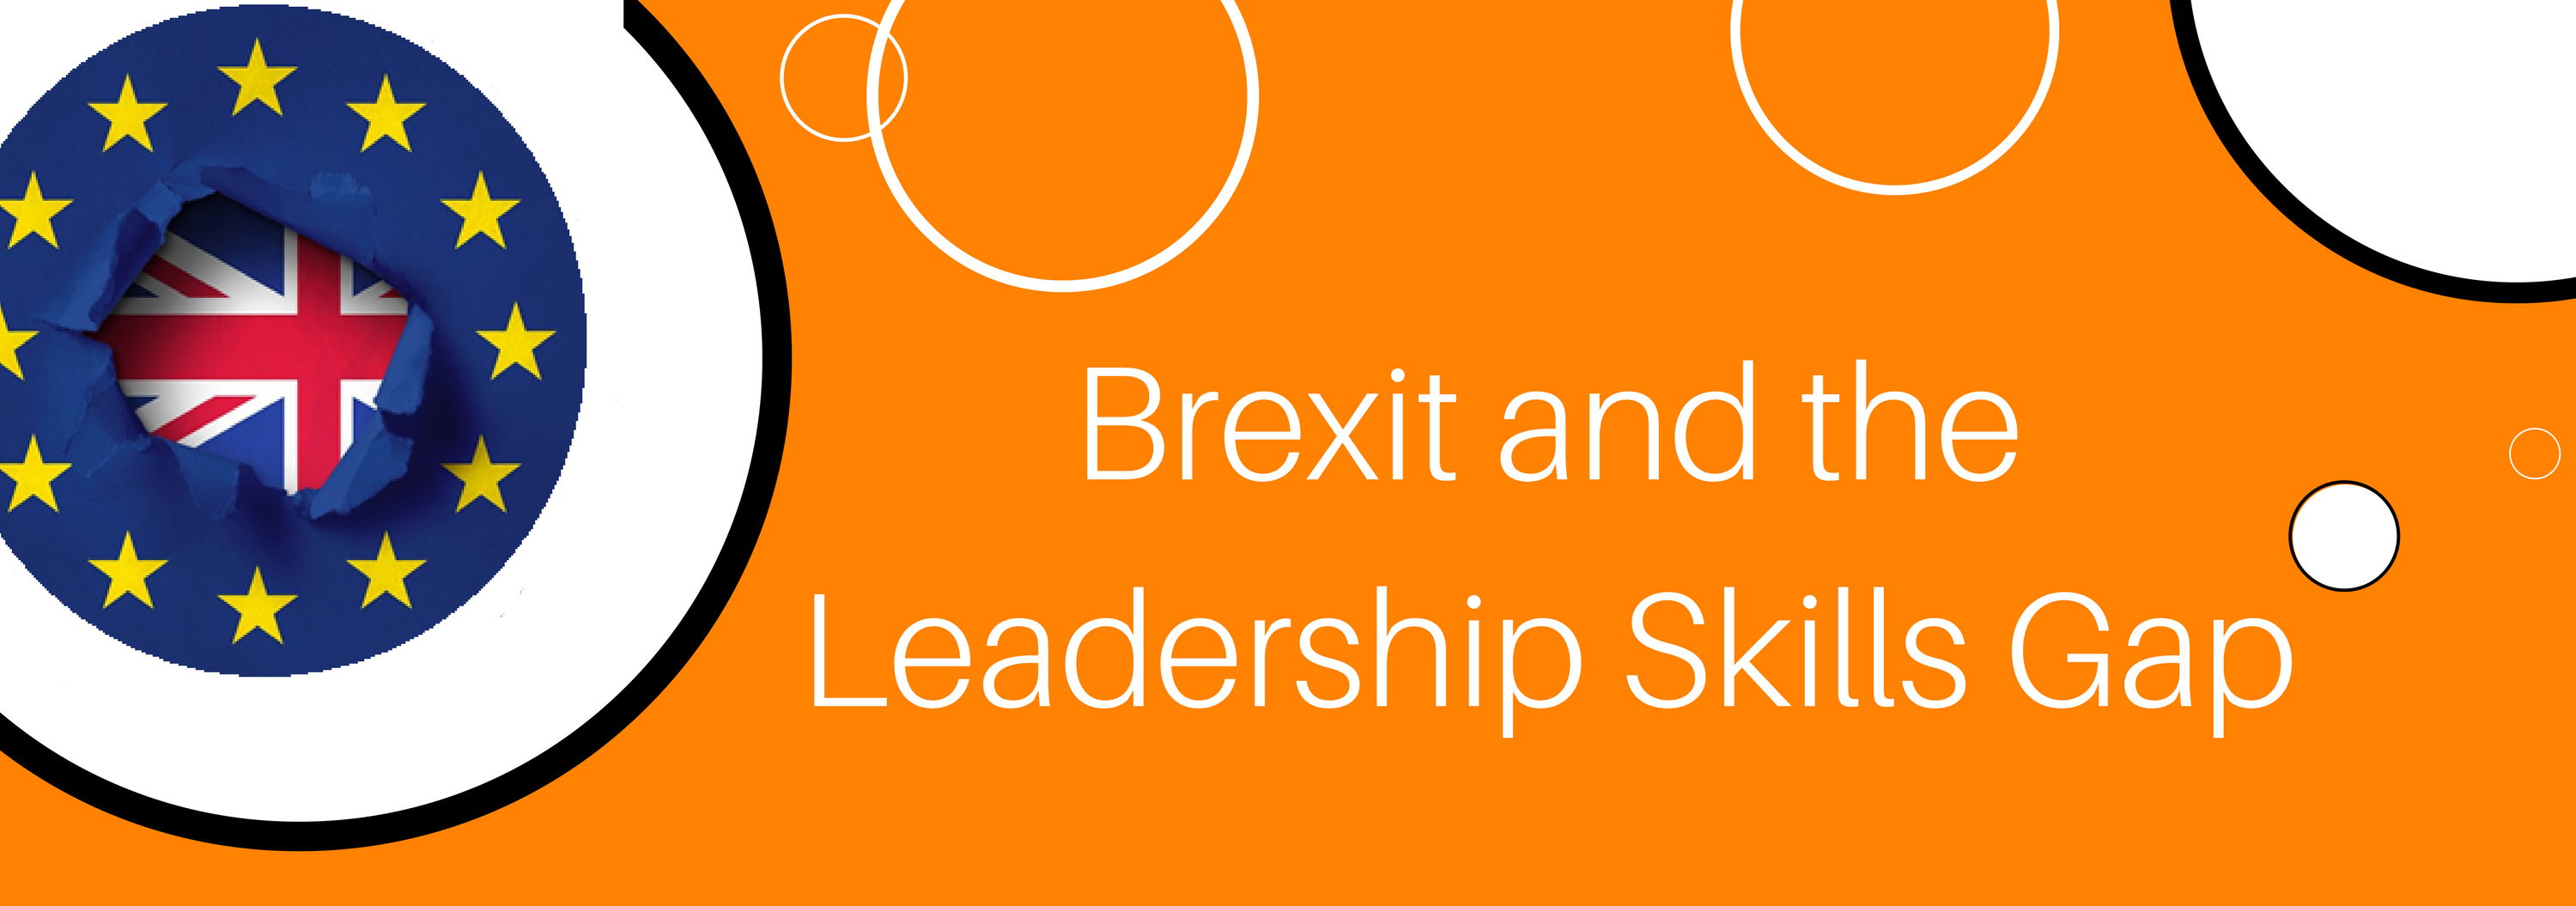 Brexit and the Leadership Skills Gap